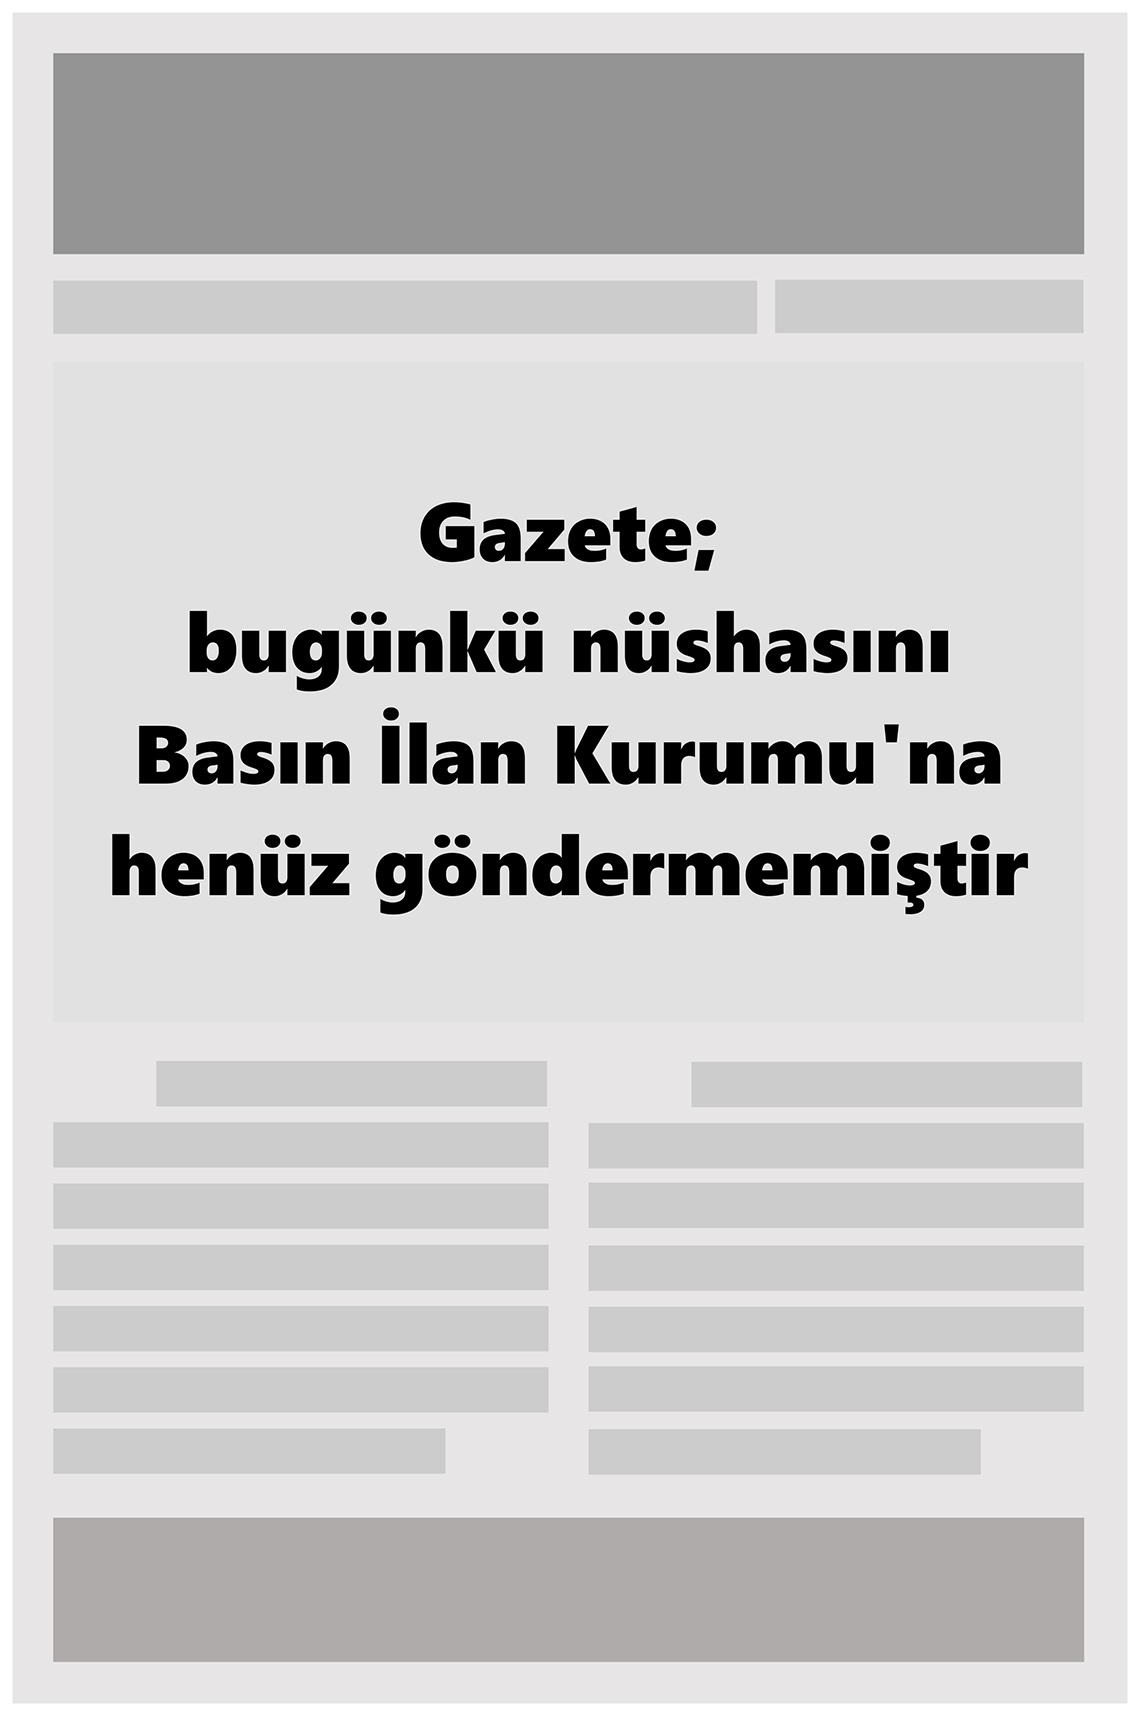 16 Ocak 2022 Erzincan Taraf 24 Gazete Manşeti